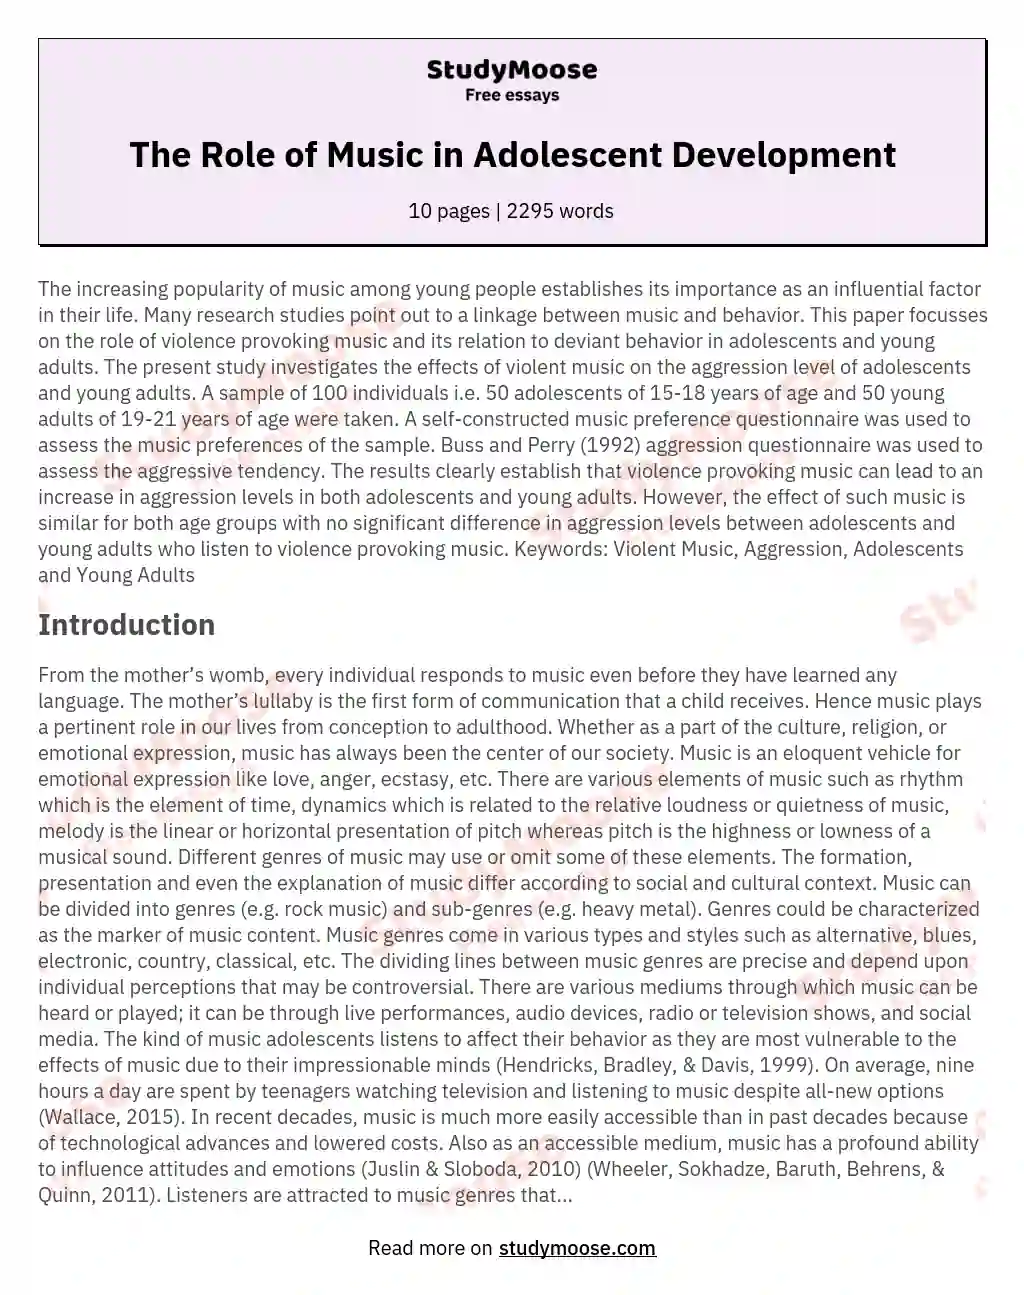 The Role of Music in Adolescent Development essay